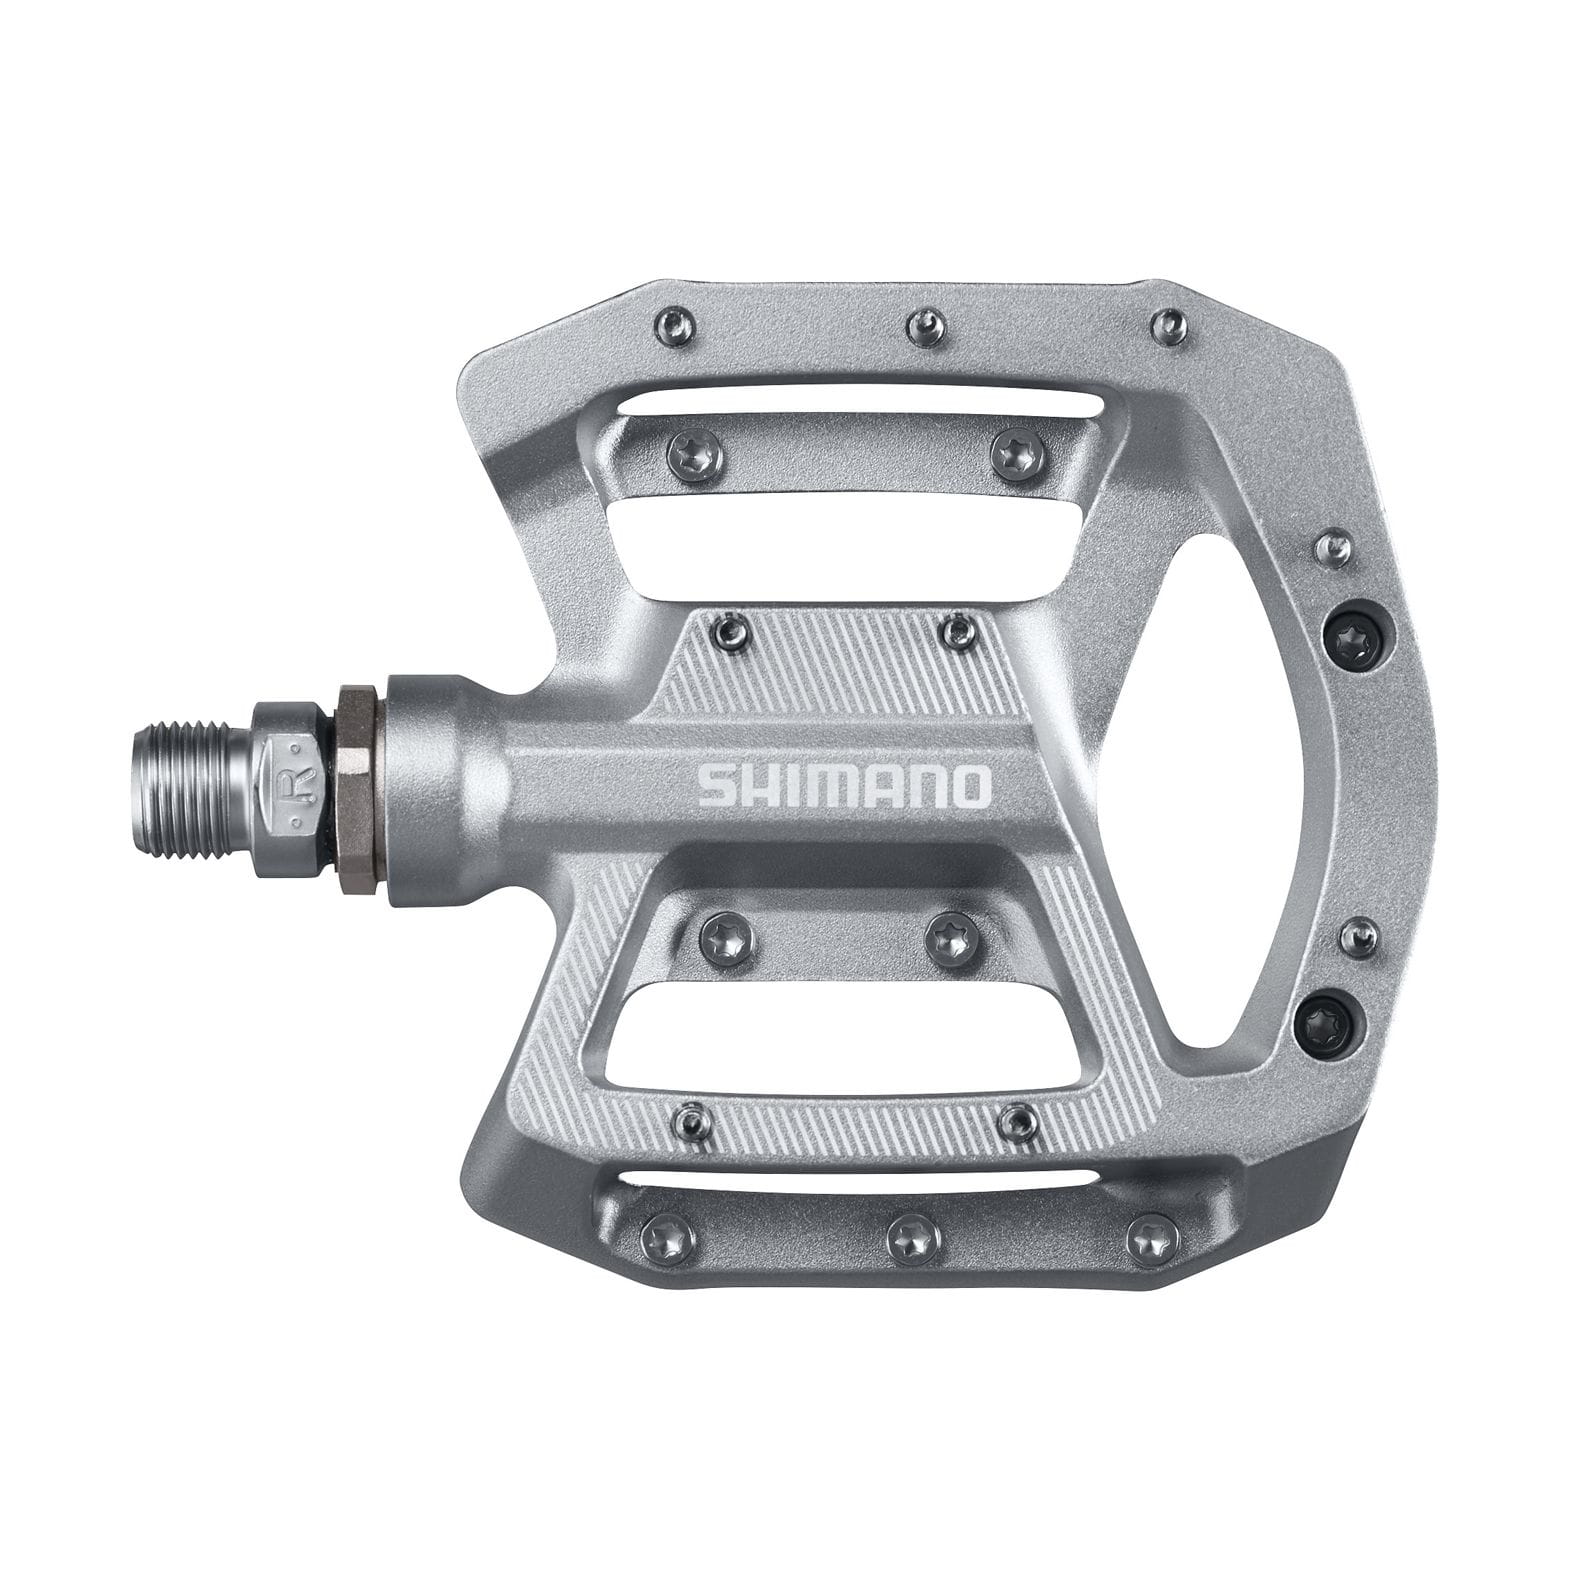 Shimano PD-GR500 Platform Pedals Aluminium with Pins